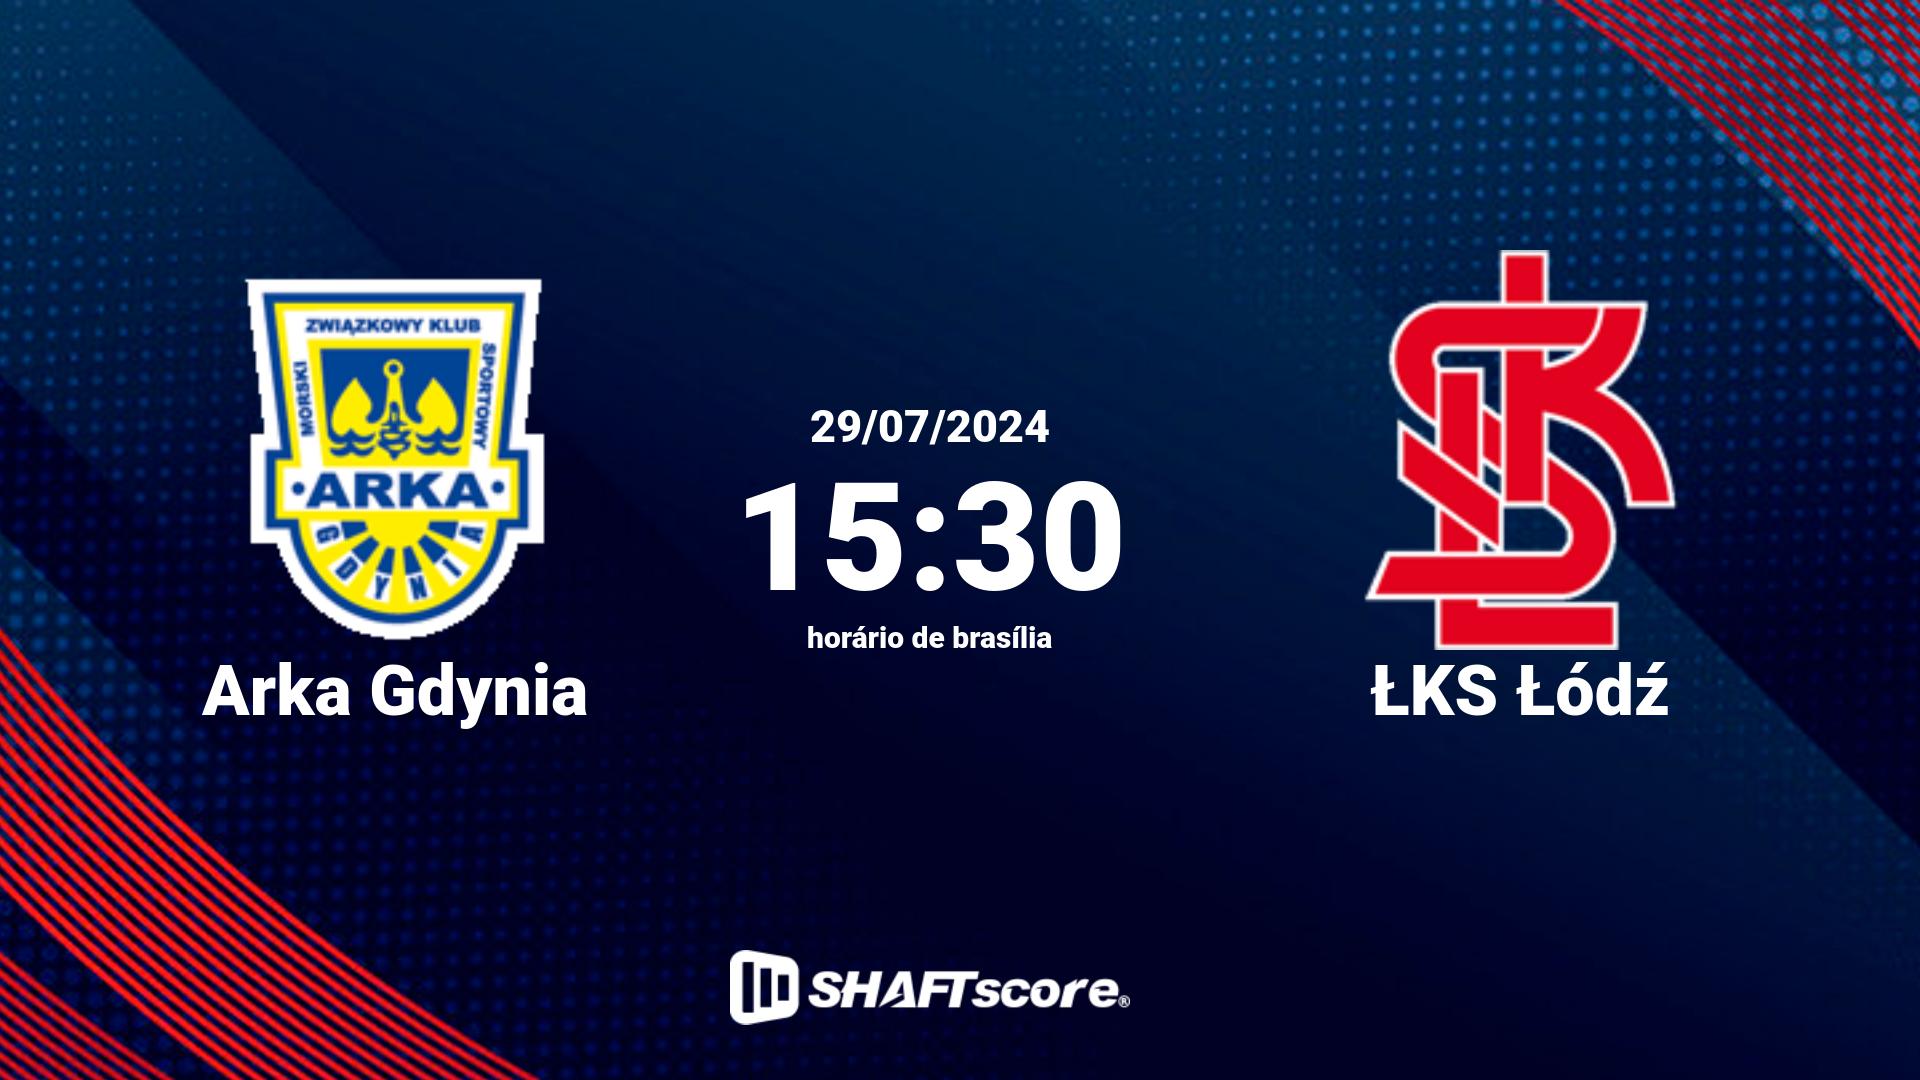 Estatísticas do jogo Arka Gdynia vs ŁKS Łódź 29.07 15:30